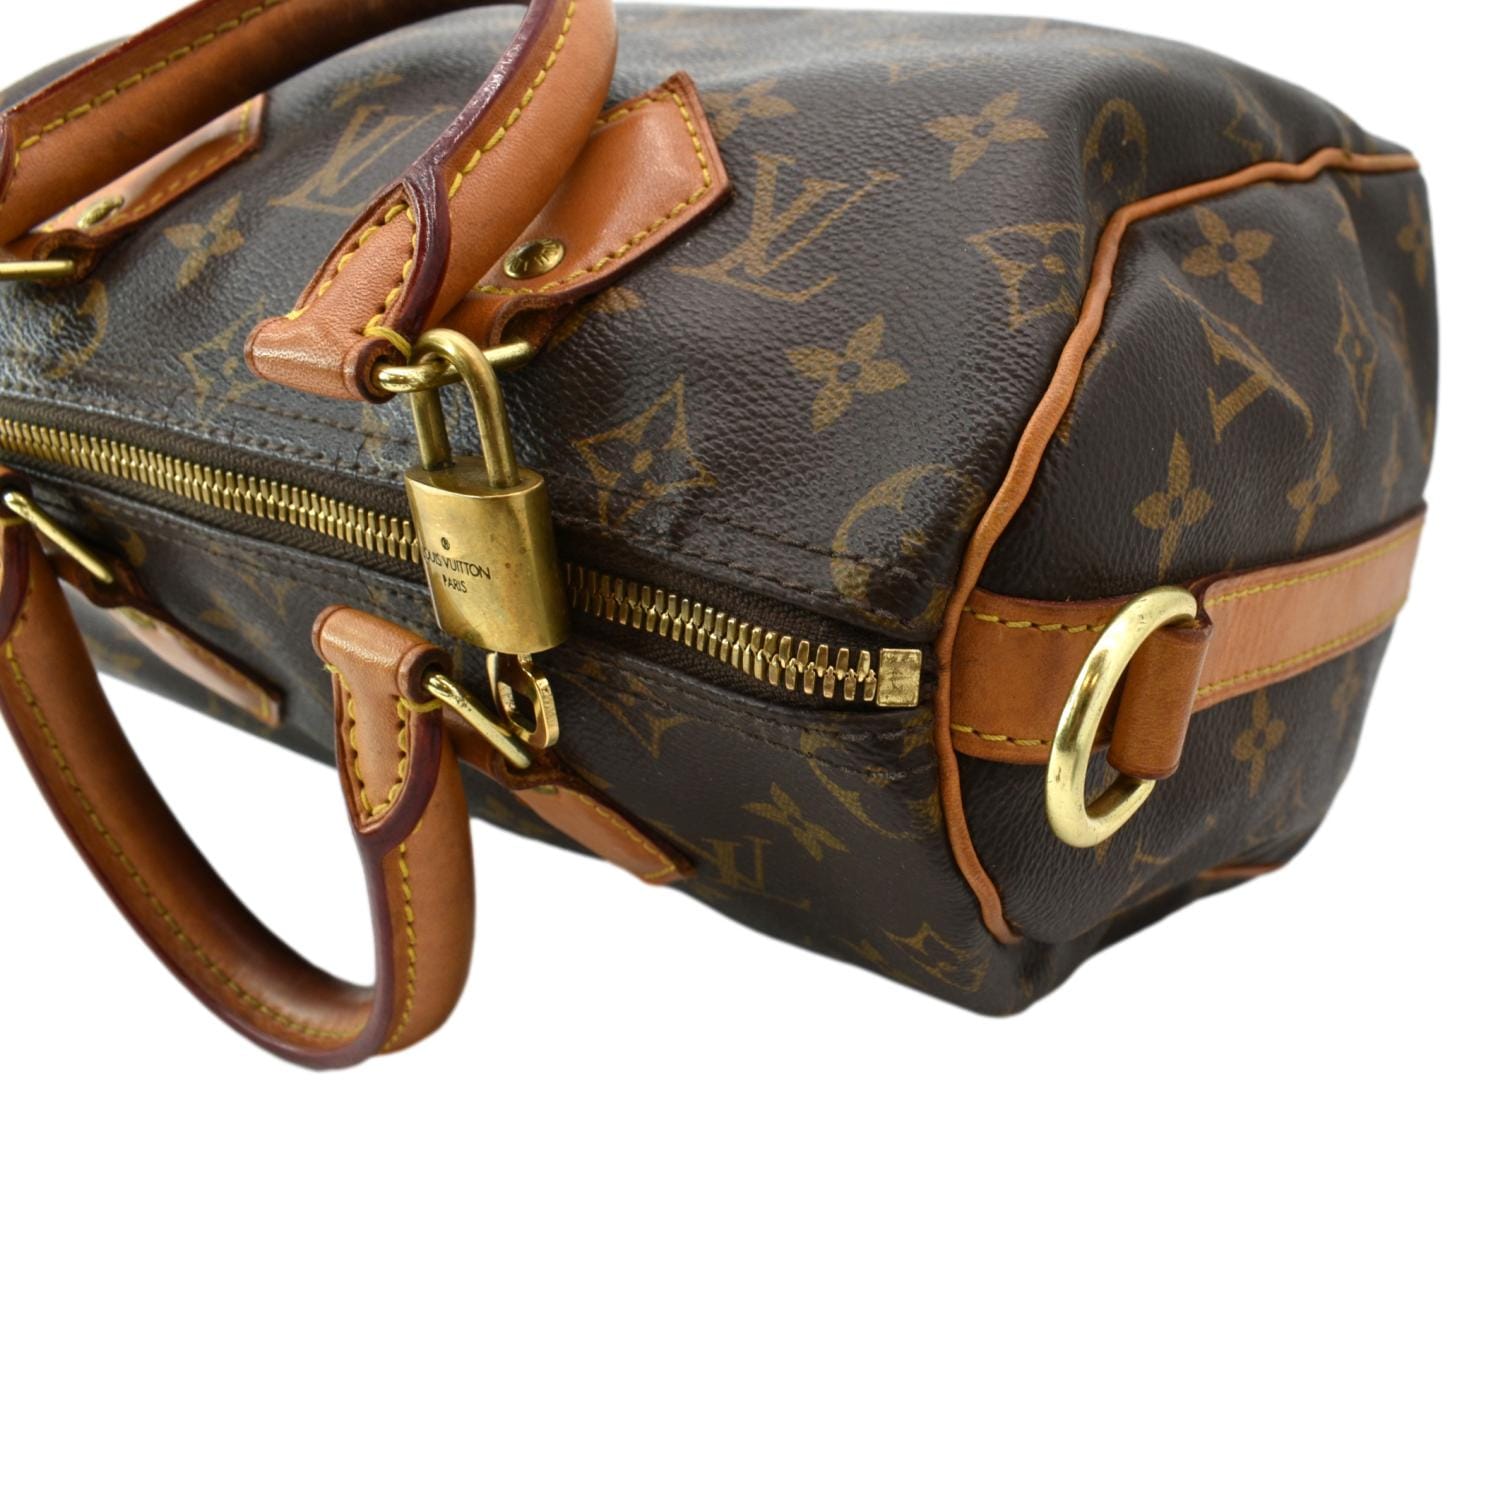 FWRD Renew Louis Vuitton Monogram Cerises Speedy 25 Bag in Brown